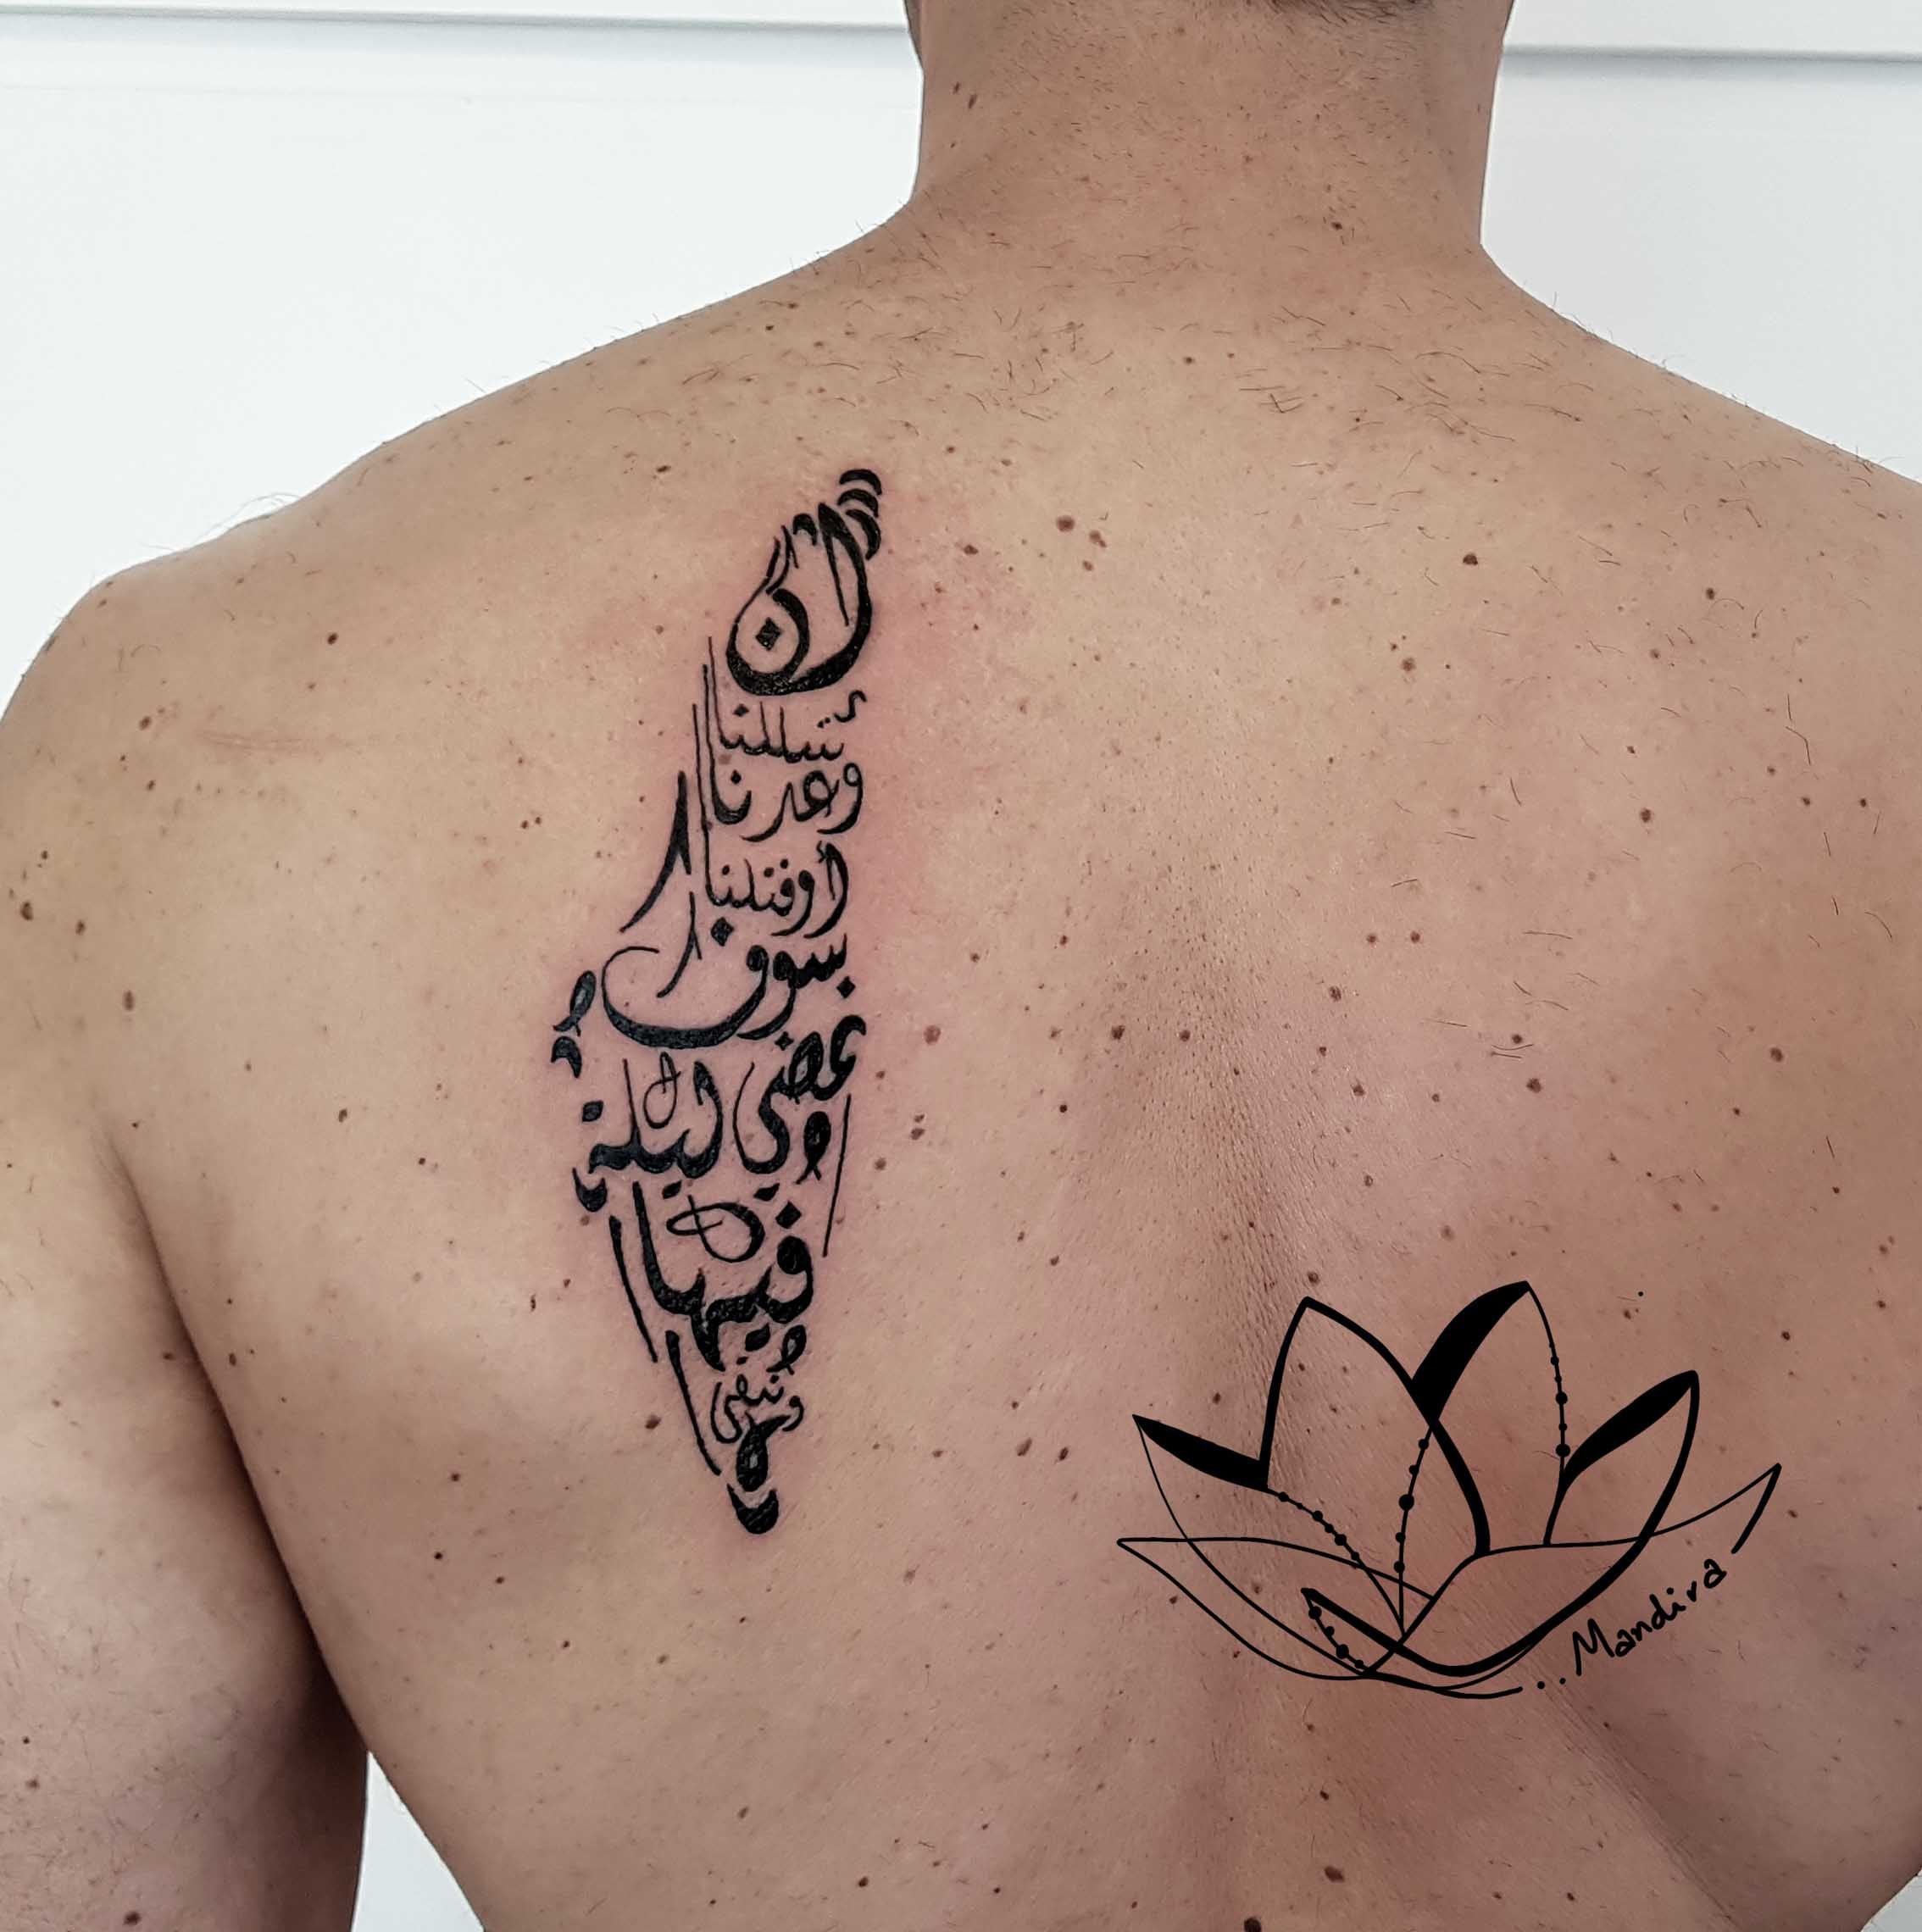 30 Best Arabic Tattoo Ideas You Should Check